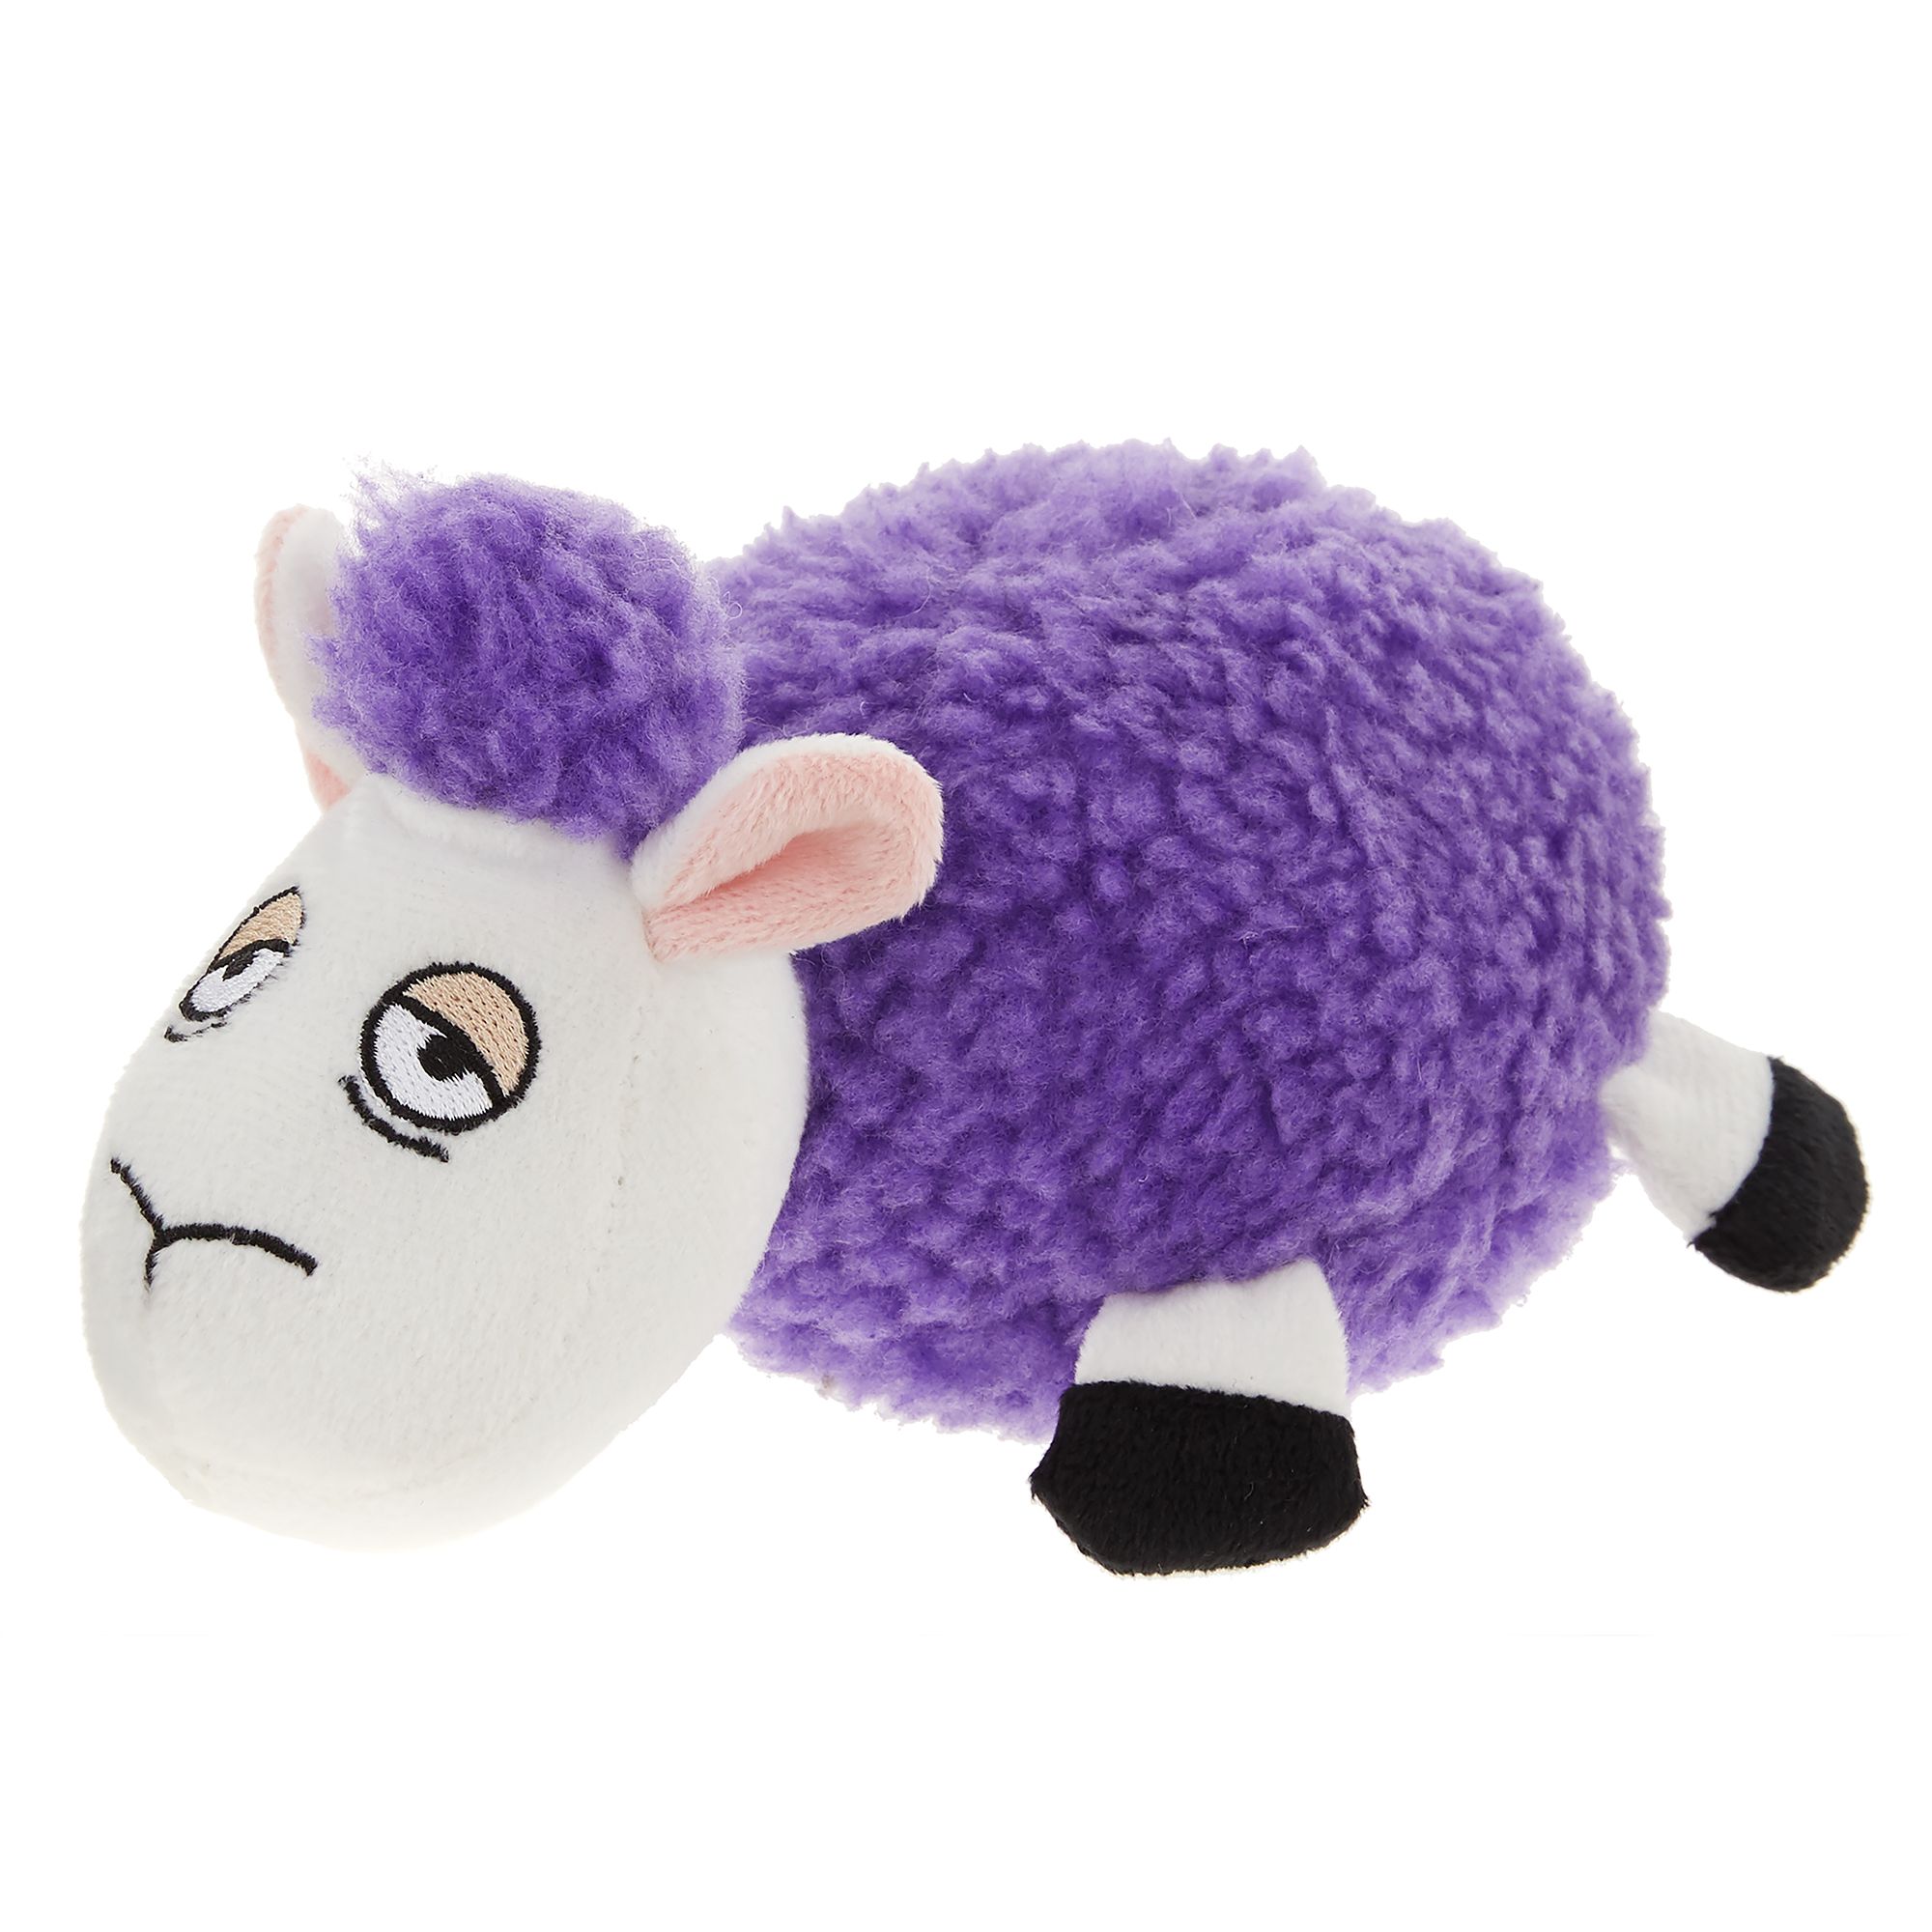 stuffed sheep dog toy